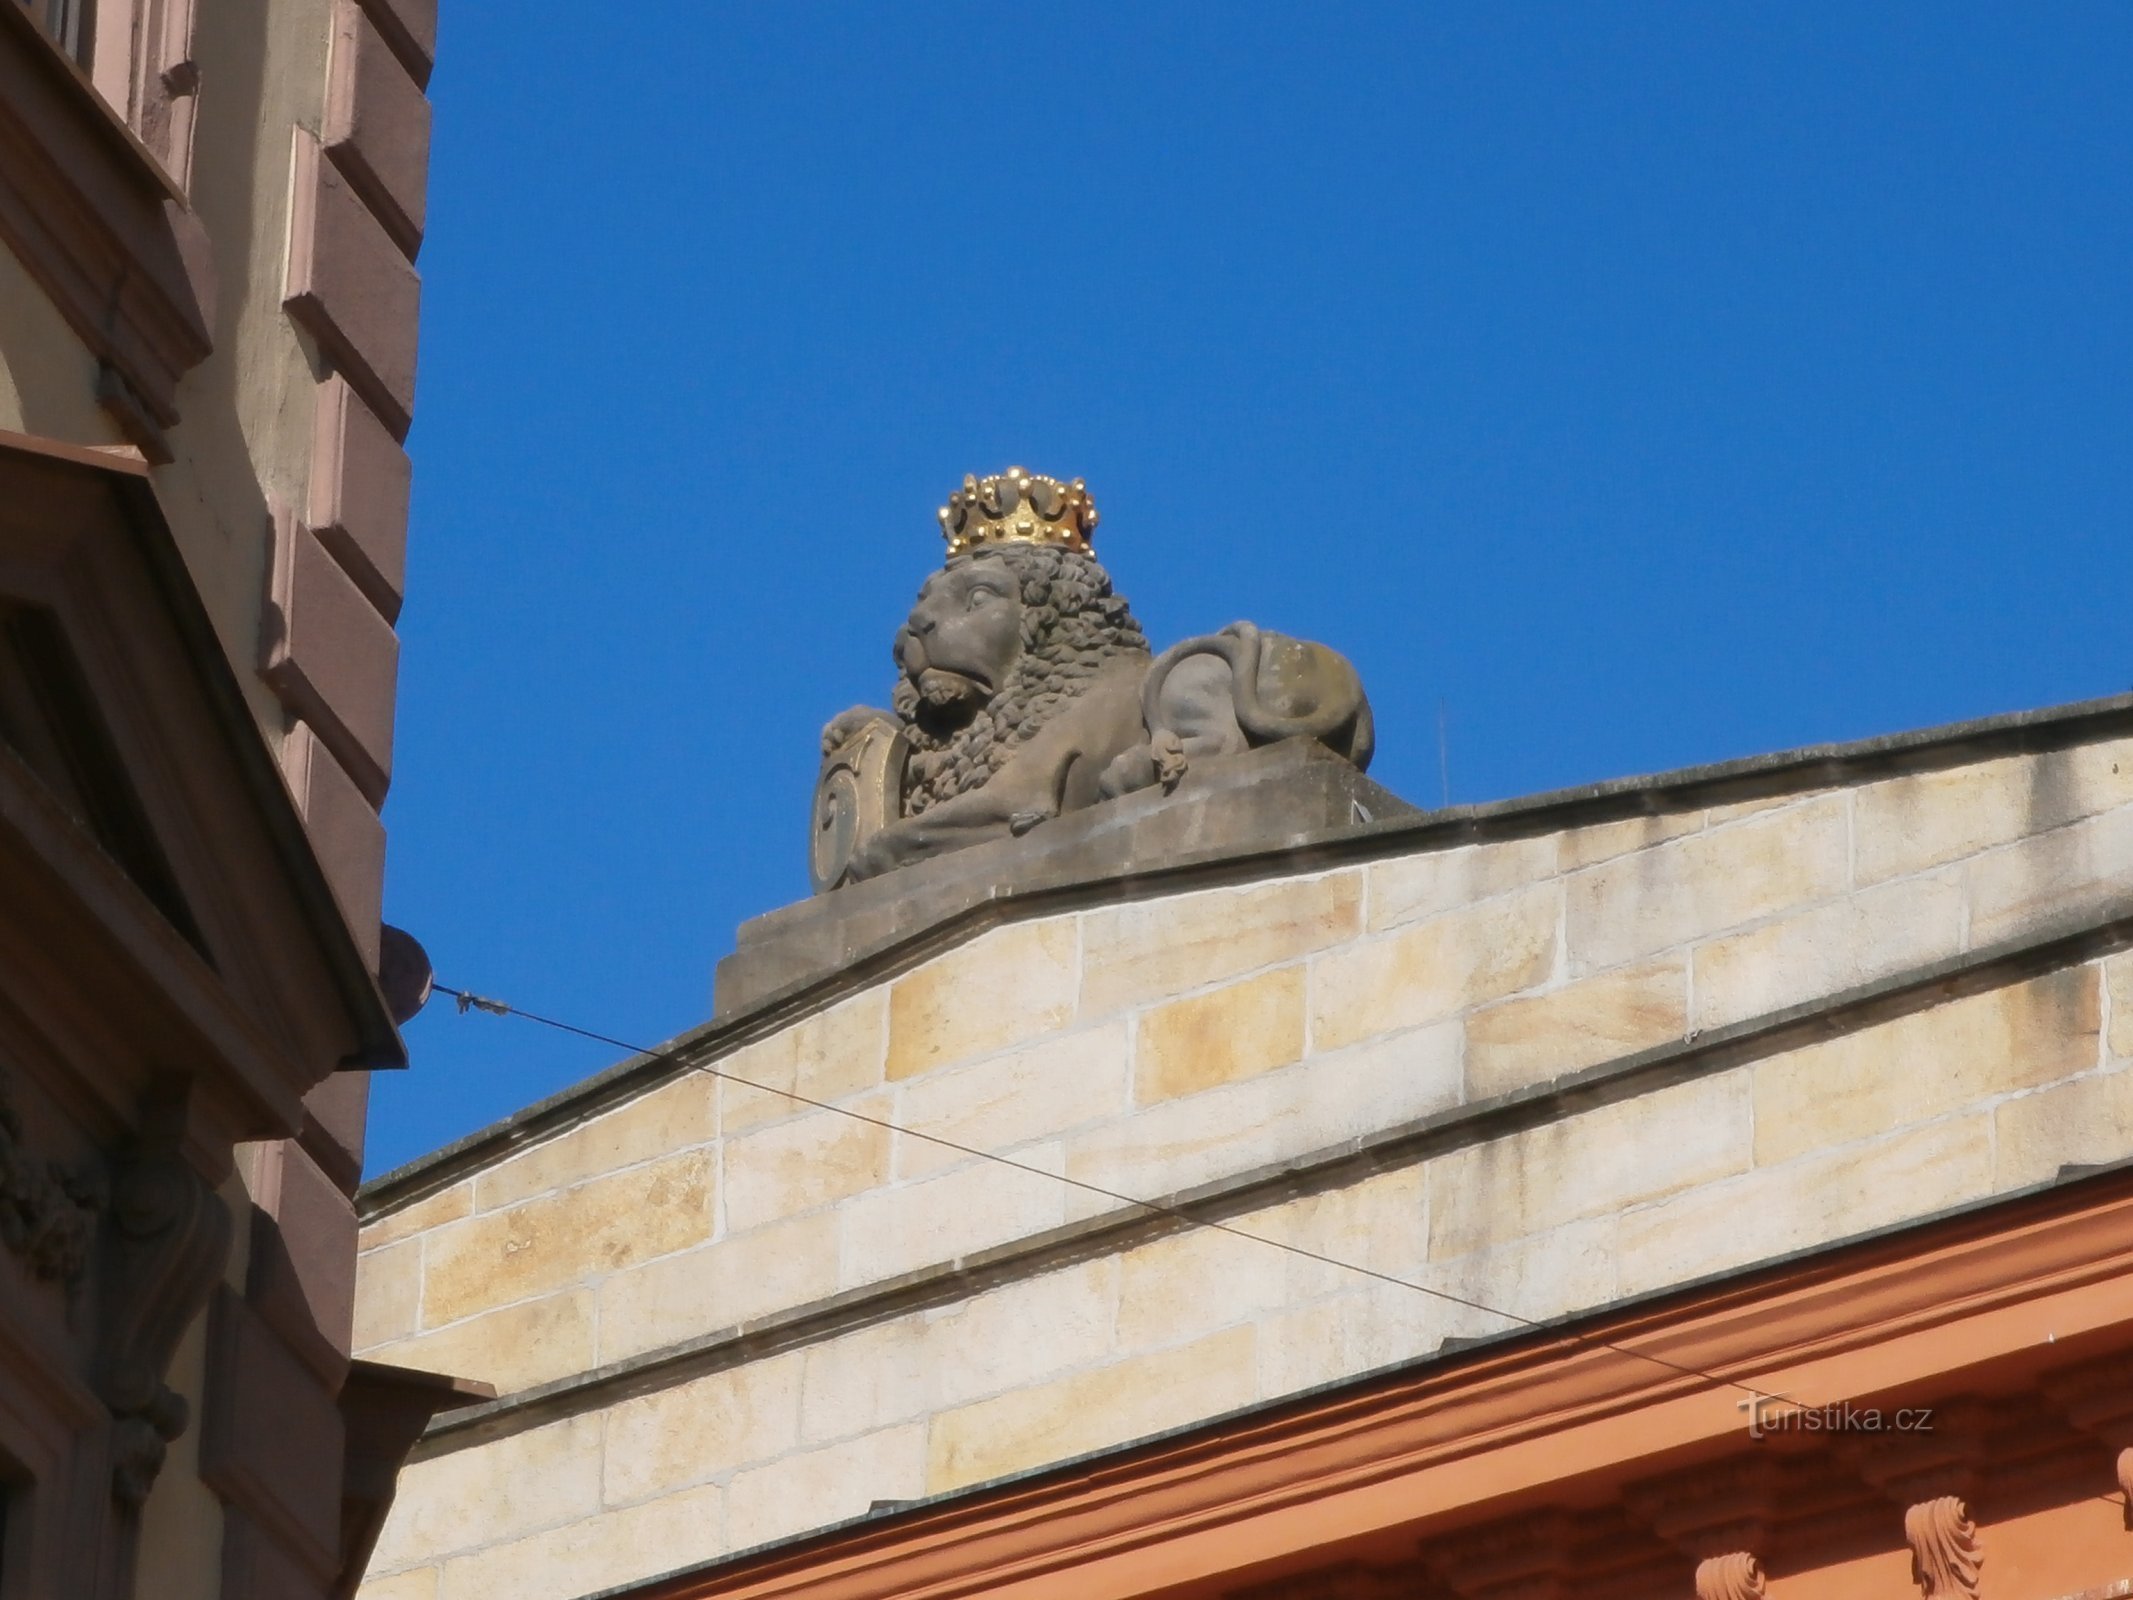 Leeuwenstandbeeld op nr. 230 (Hradec Králové, 18.6.2016/XNUMX/XNUMX)